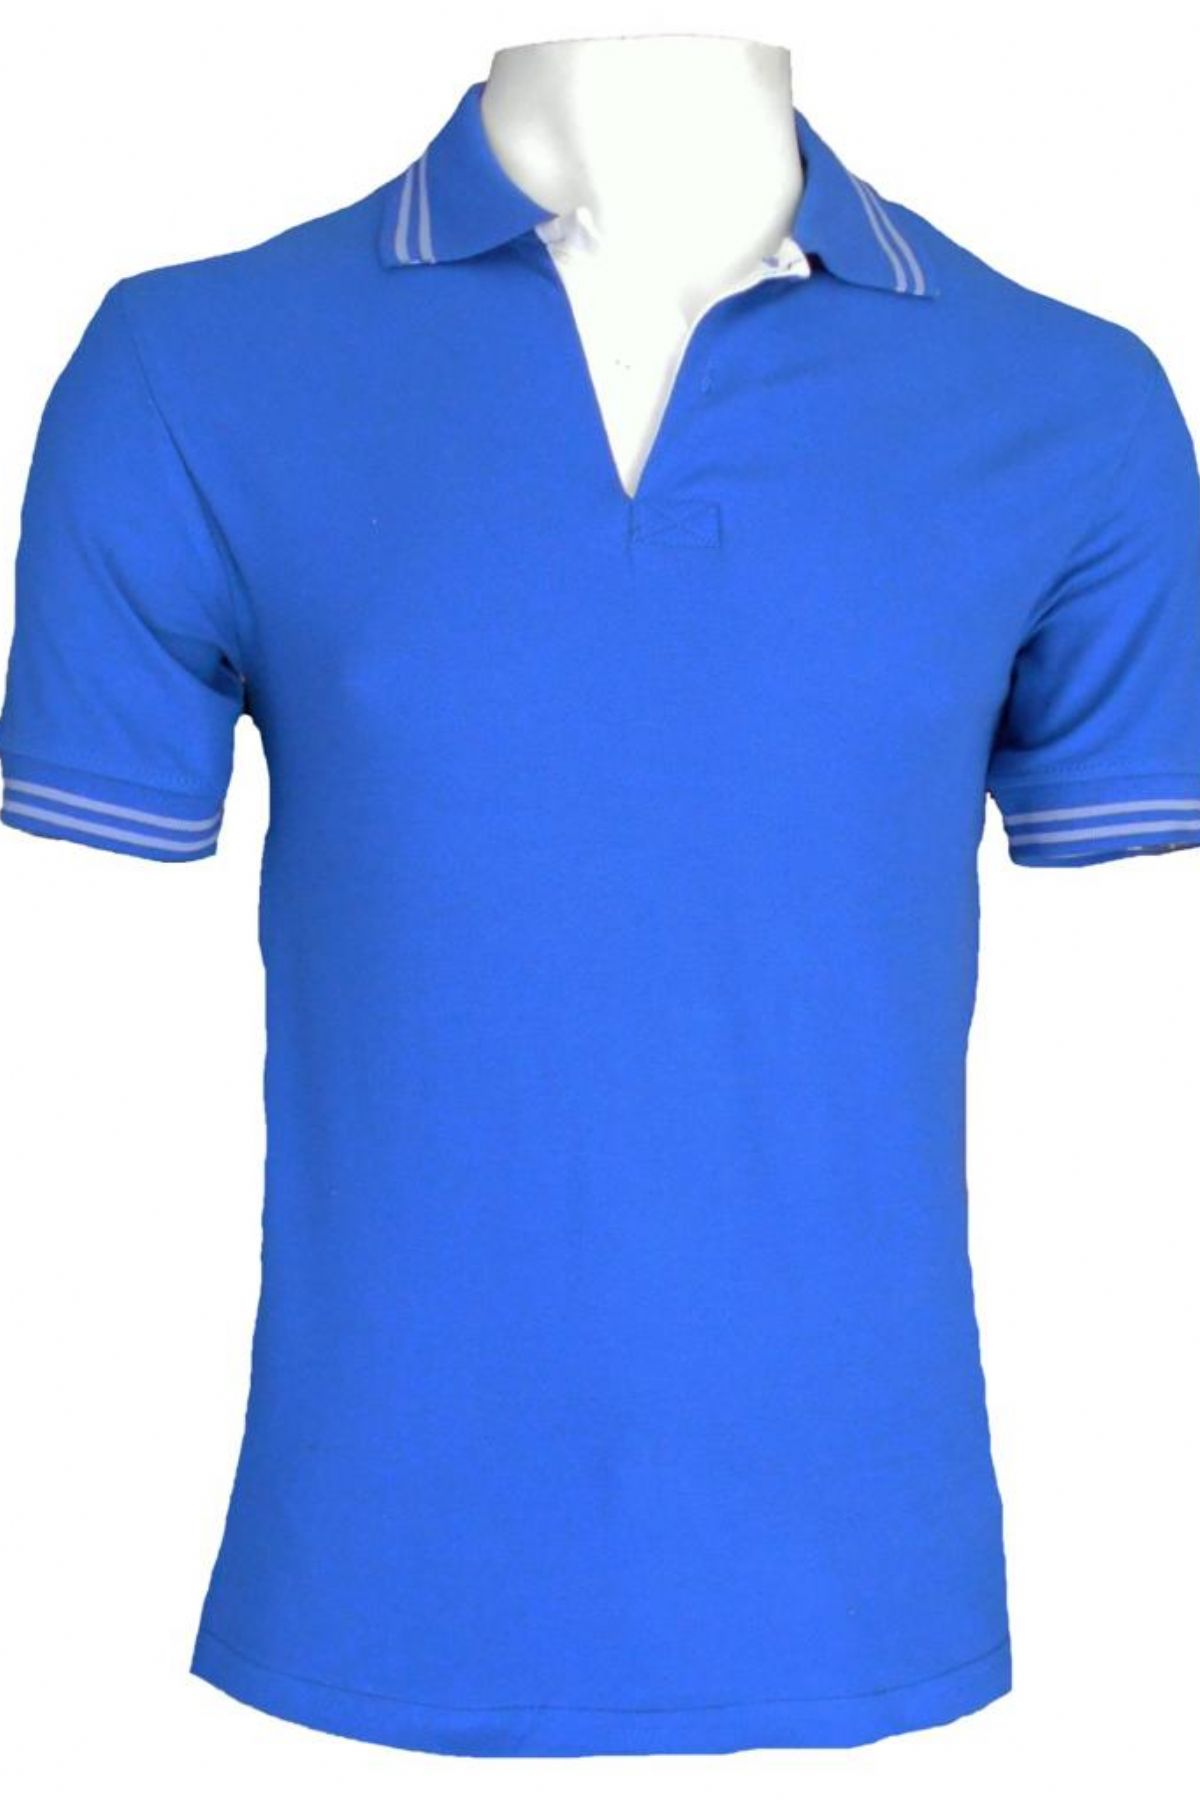 Lacoste T-shirt Saks Mavi Renk Kol Ucu Ribanalı